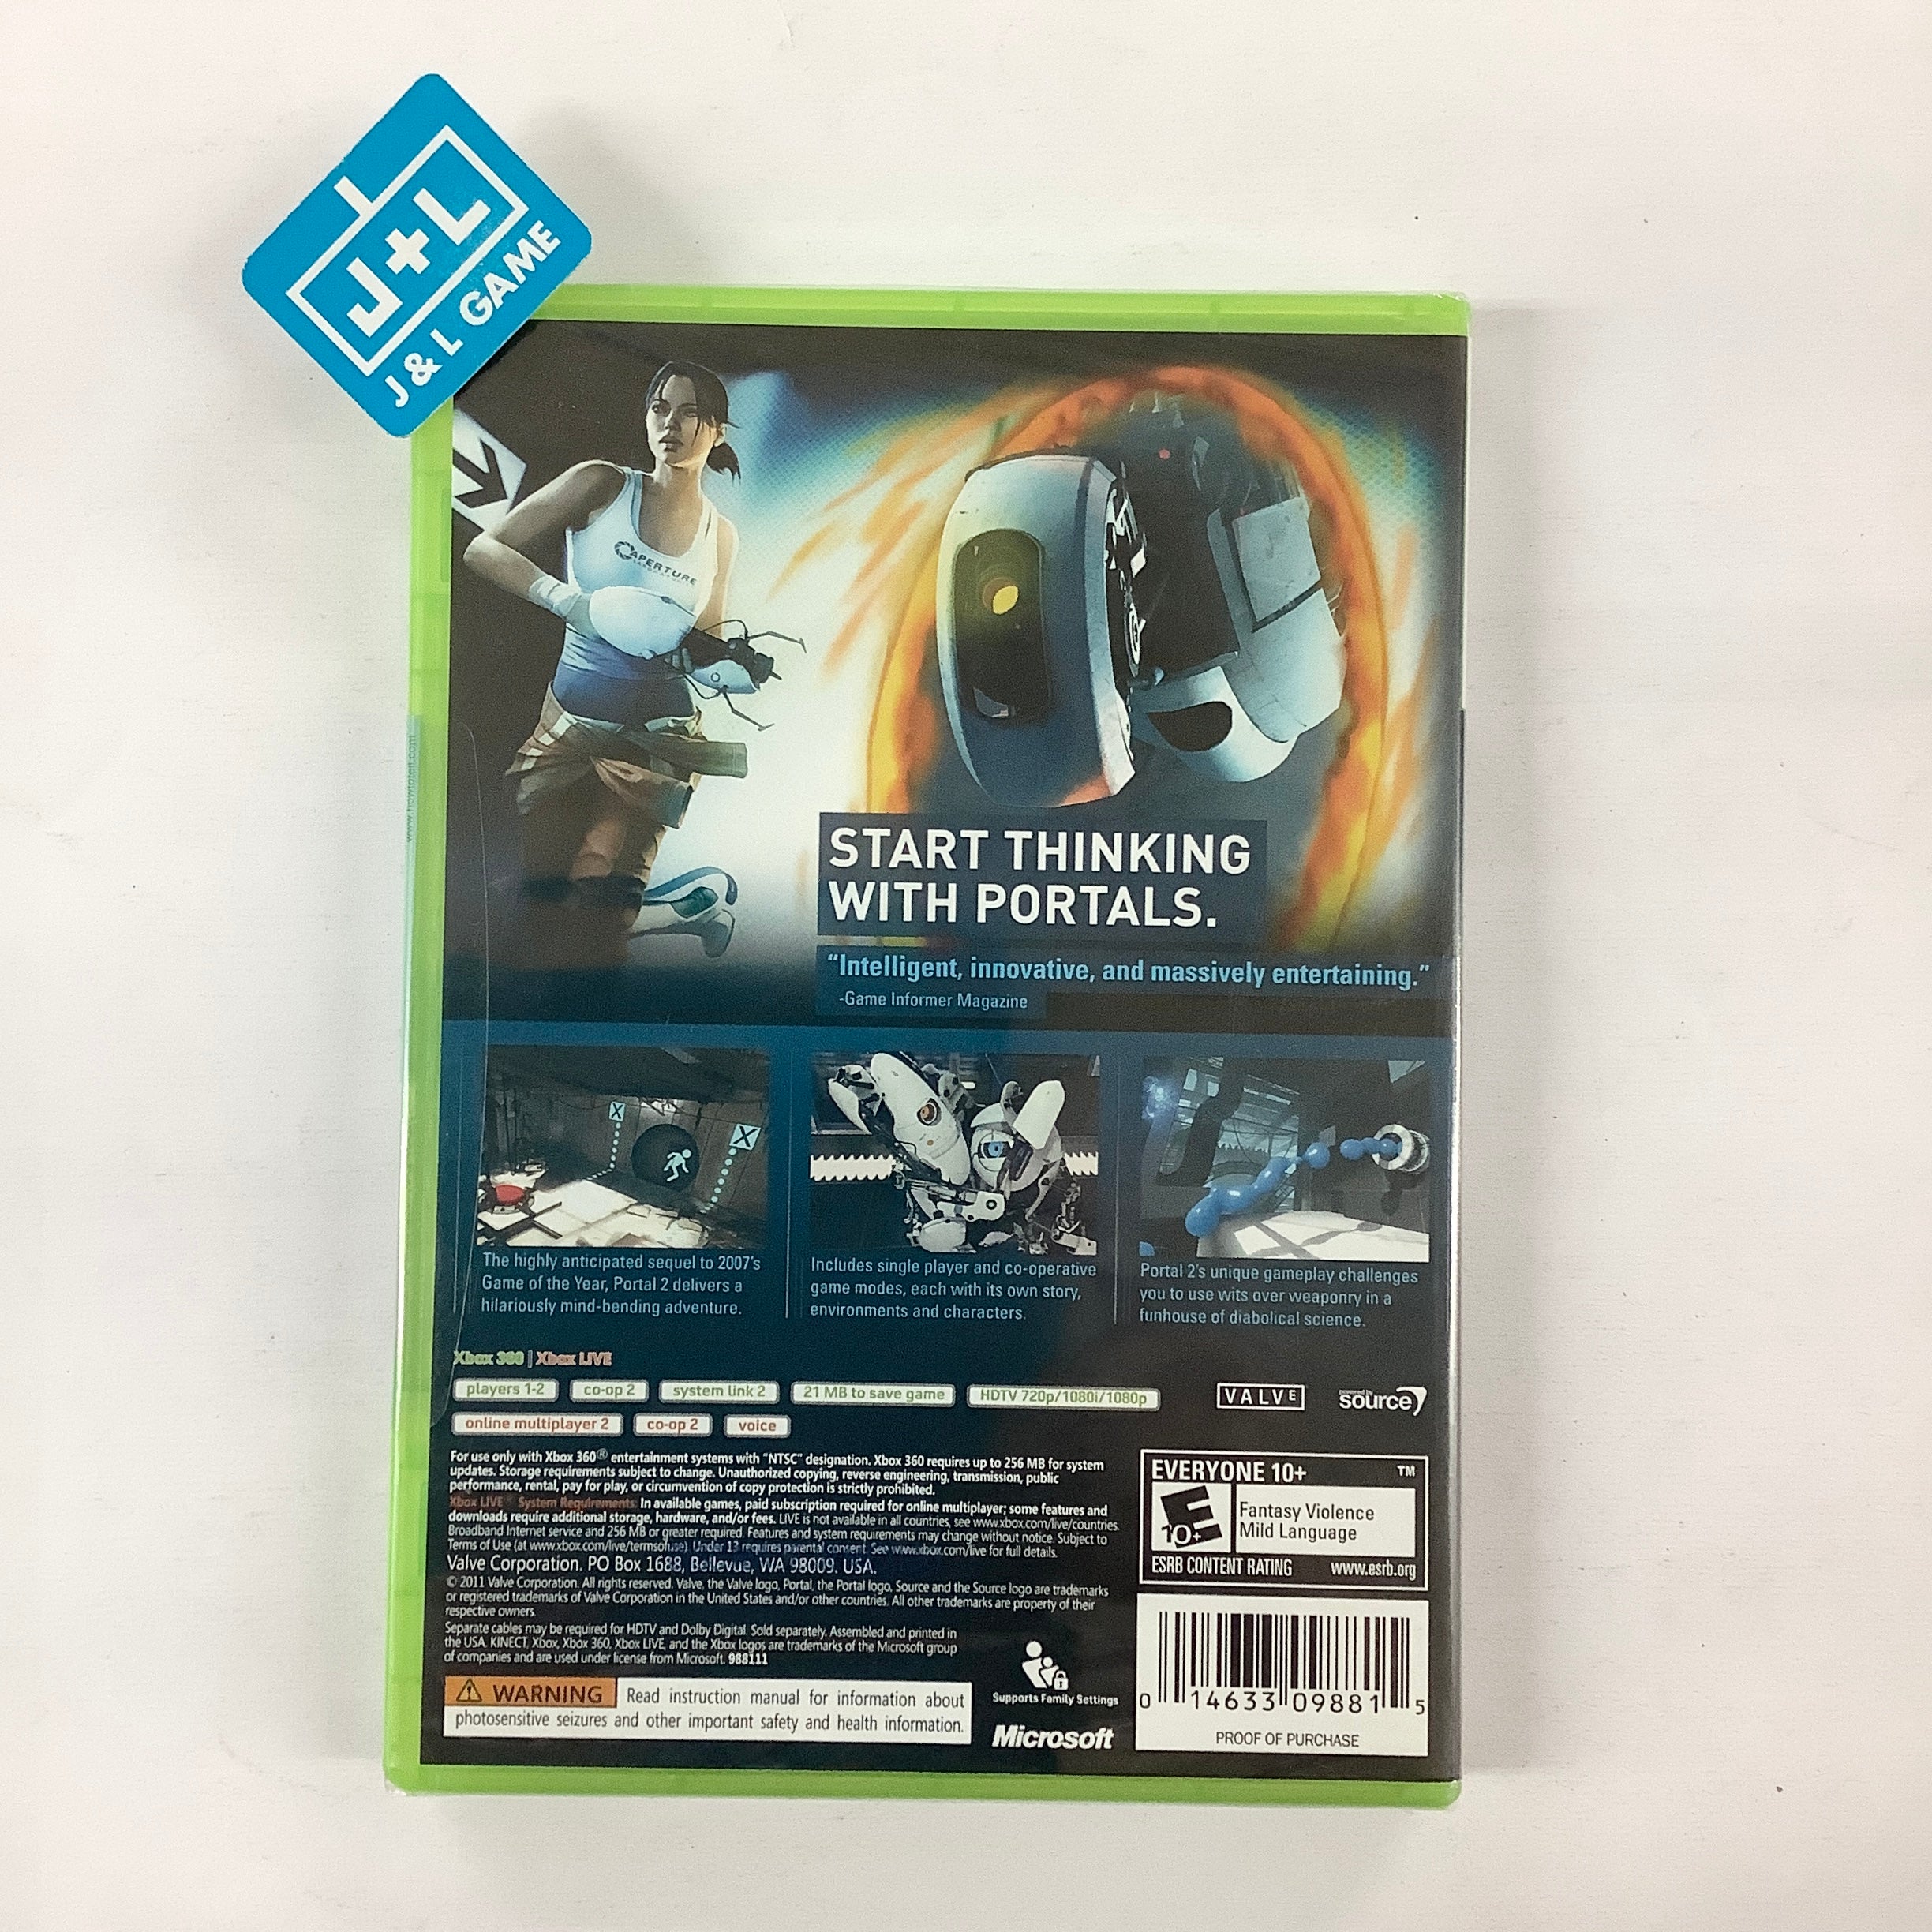 Portal 2 - Xbox 360 Video Games Valve Software   